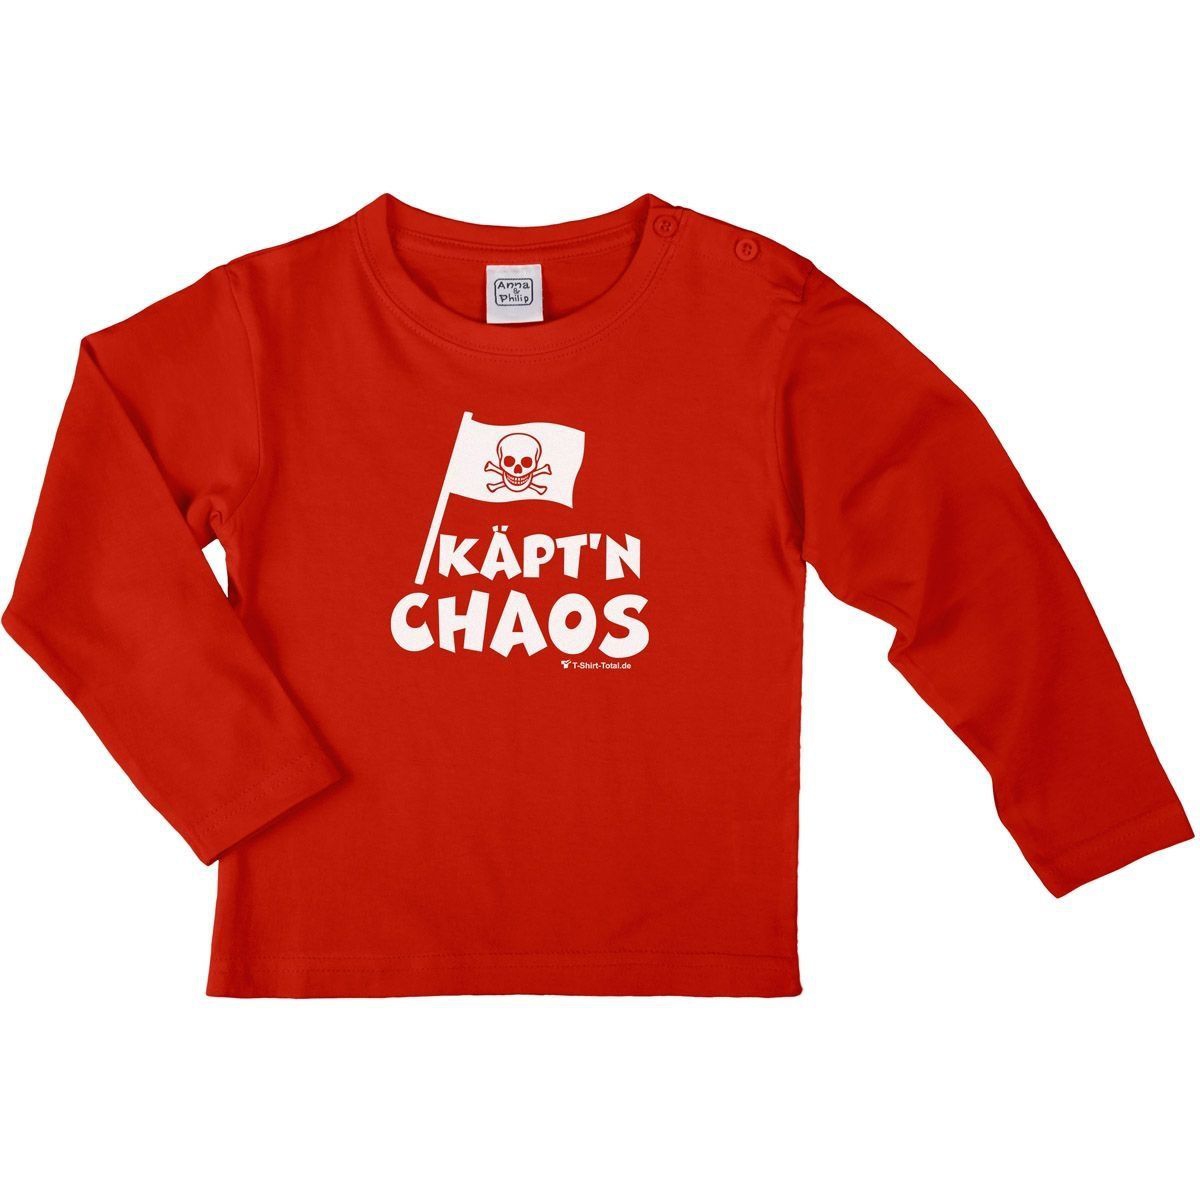 Käptn Chaos Kinder Langarm Shirt rot 134 / 140